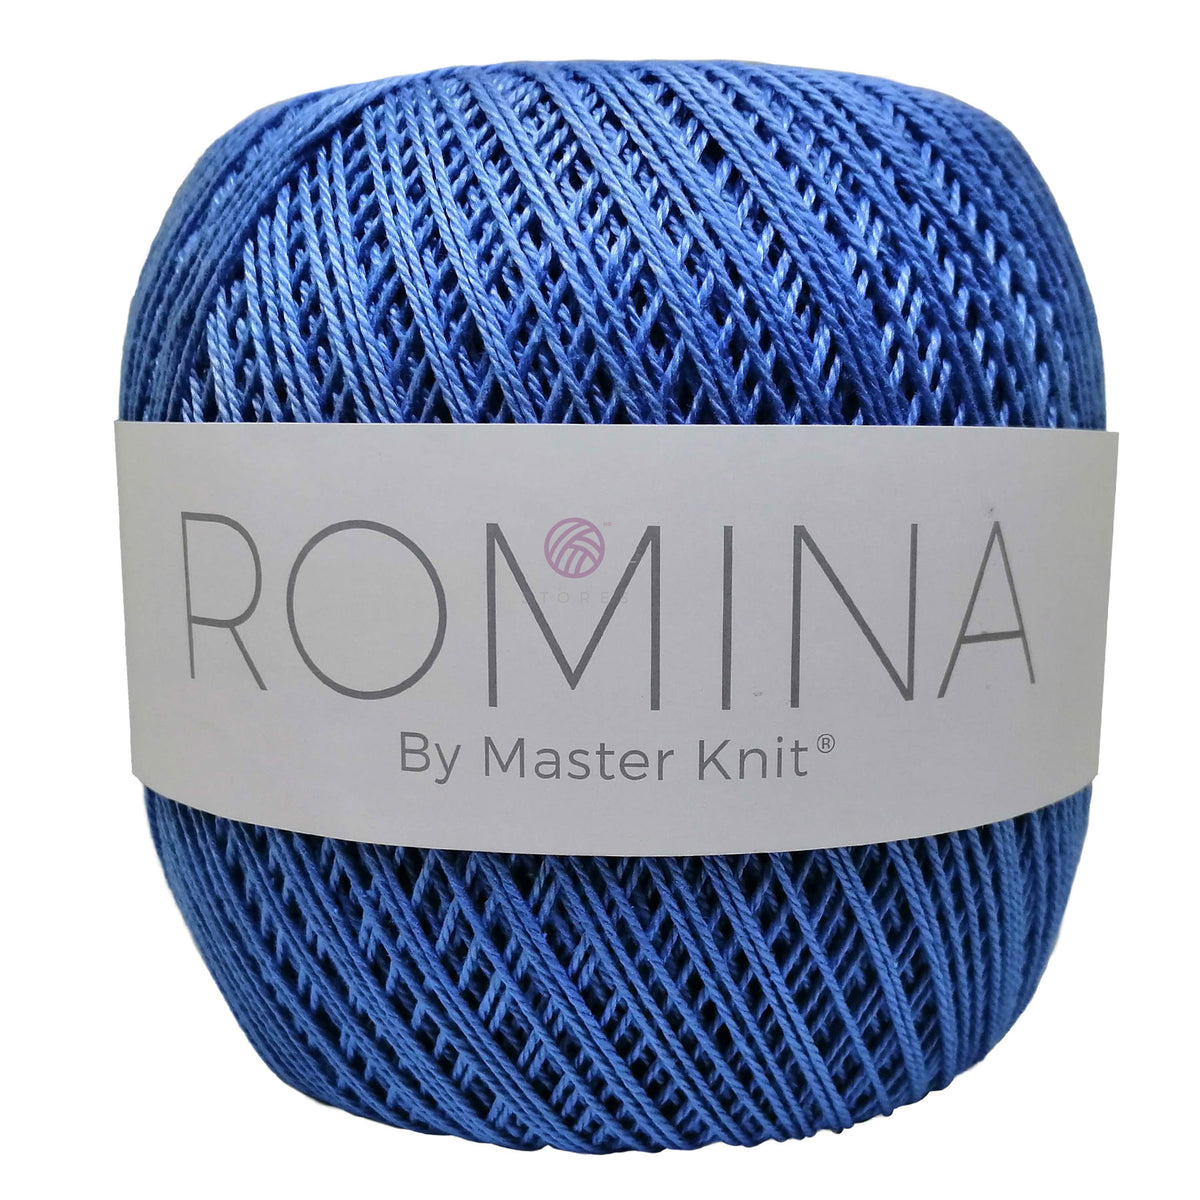 ROMINA - Crochetstores9335-187745051438524